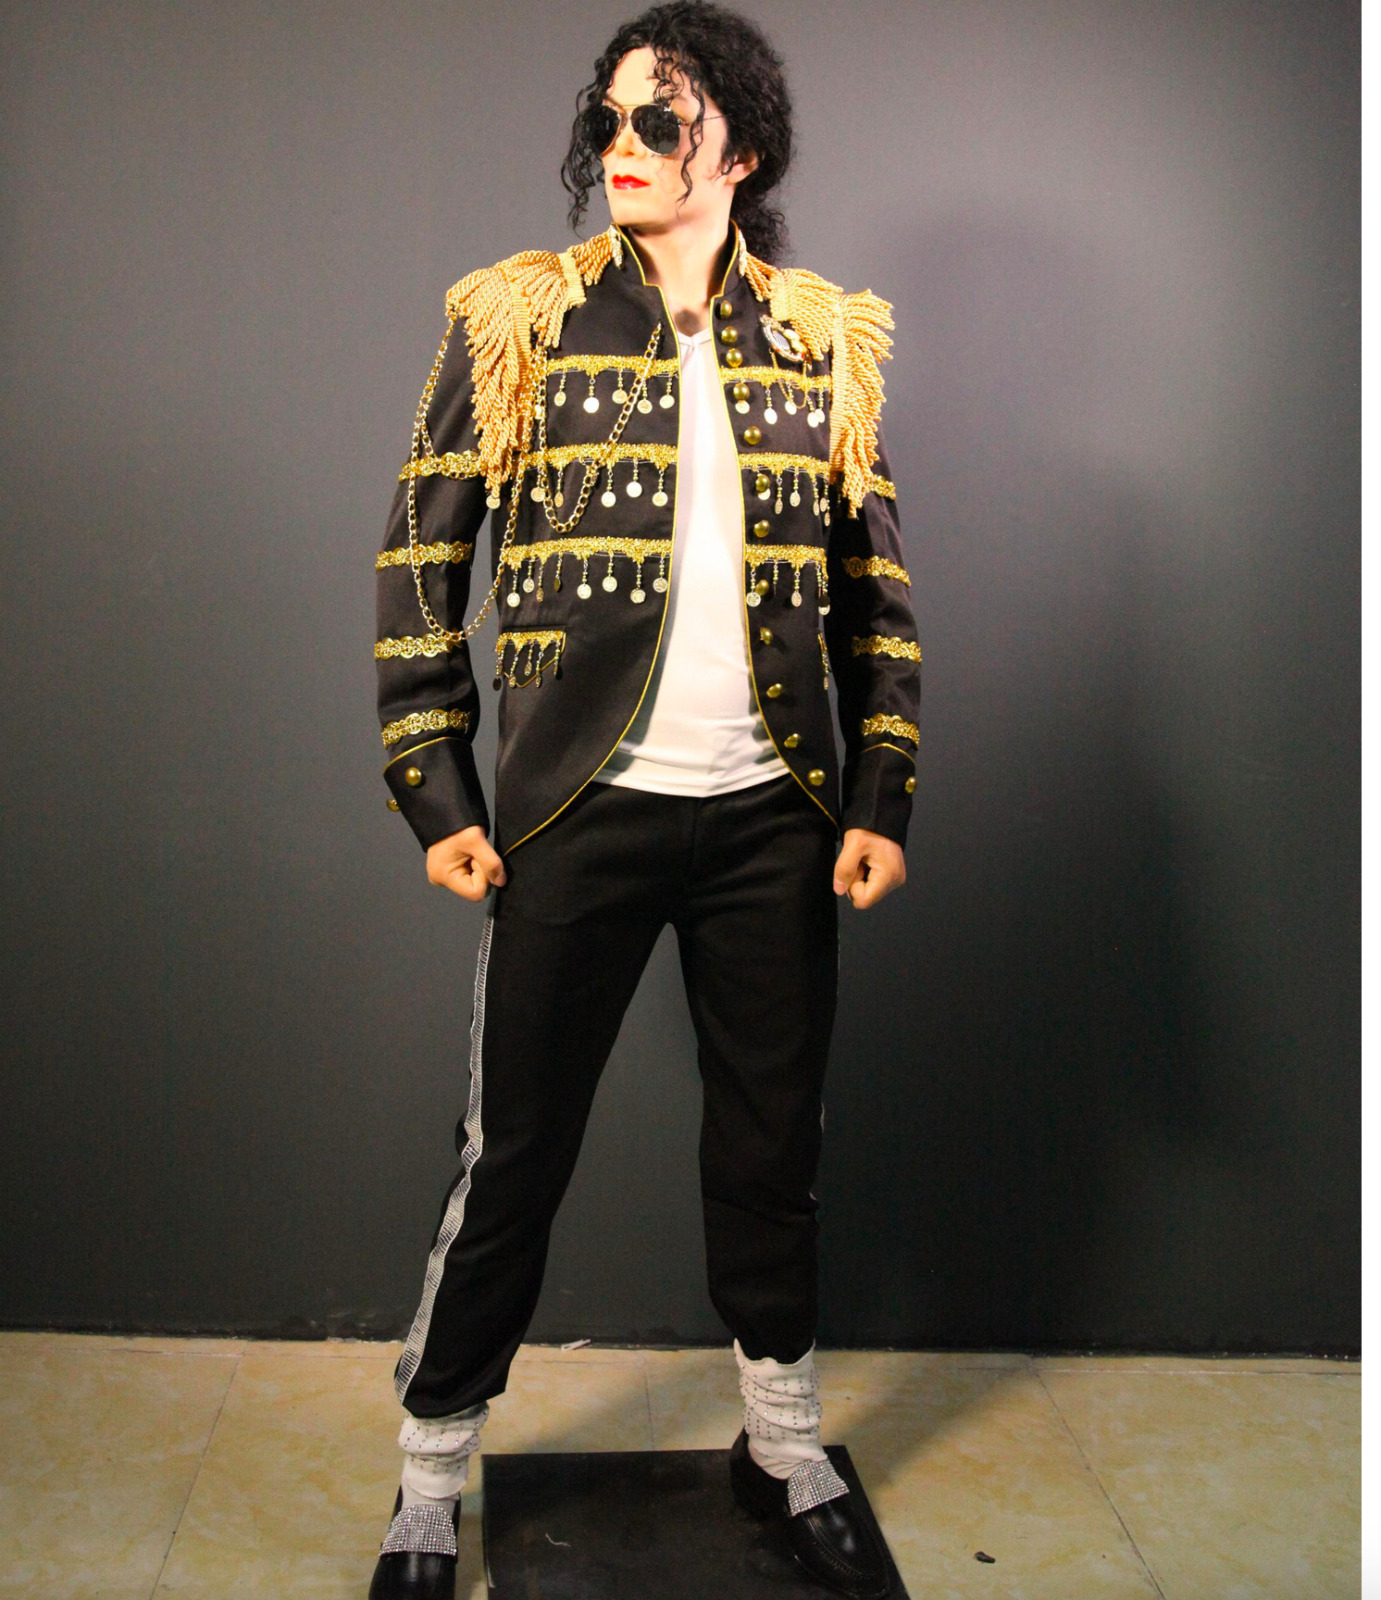 Life Size Michael Jackson Dance Posing Statue Prop Display MJ Singing Music 1:1